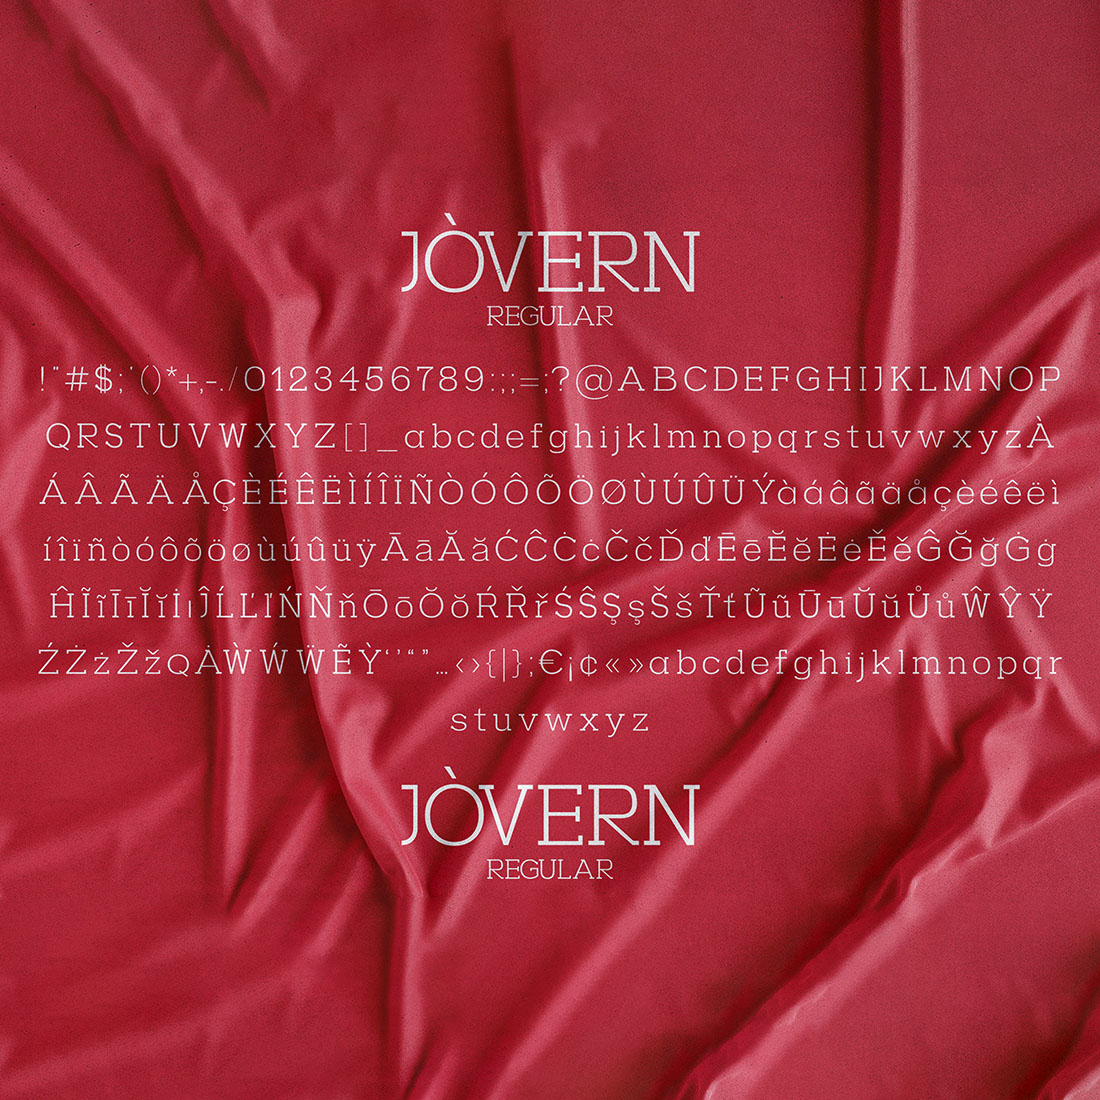 Jovern Slab Serif Font regular type preview.